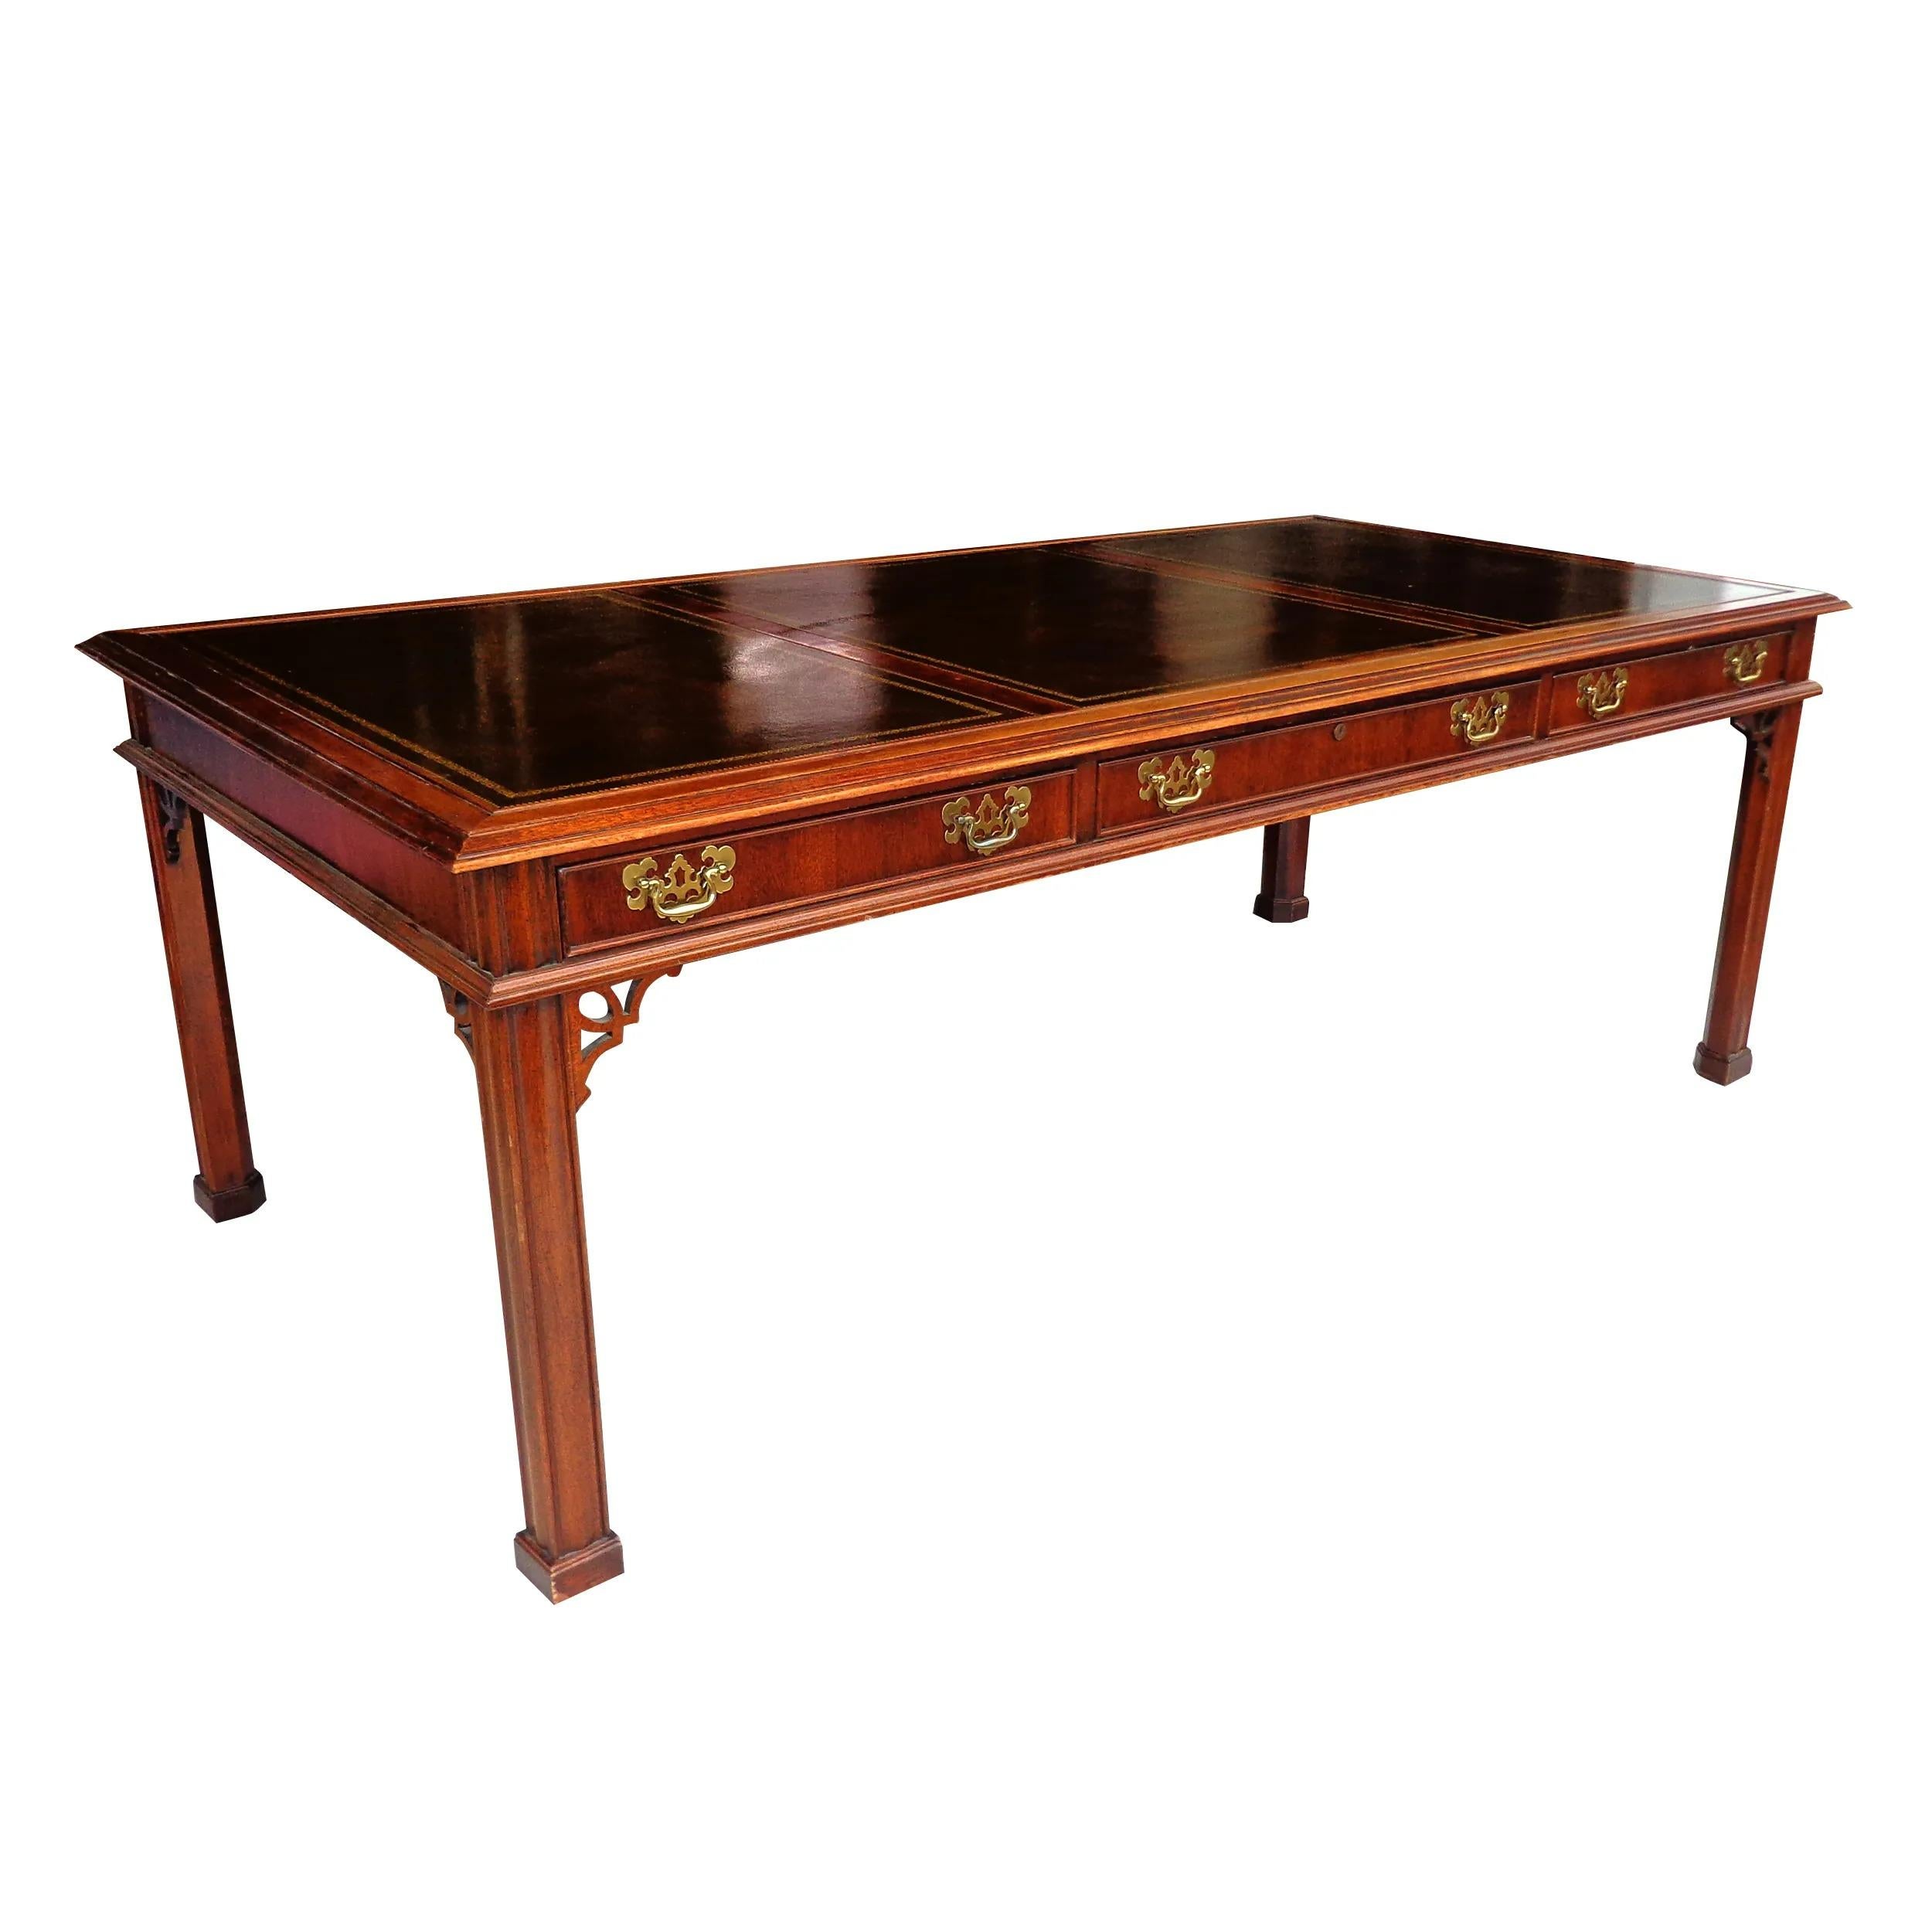 North American 7' Banded Chippendale Regency Sligh Furniture Writing Desk